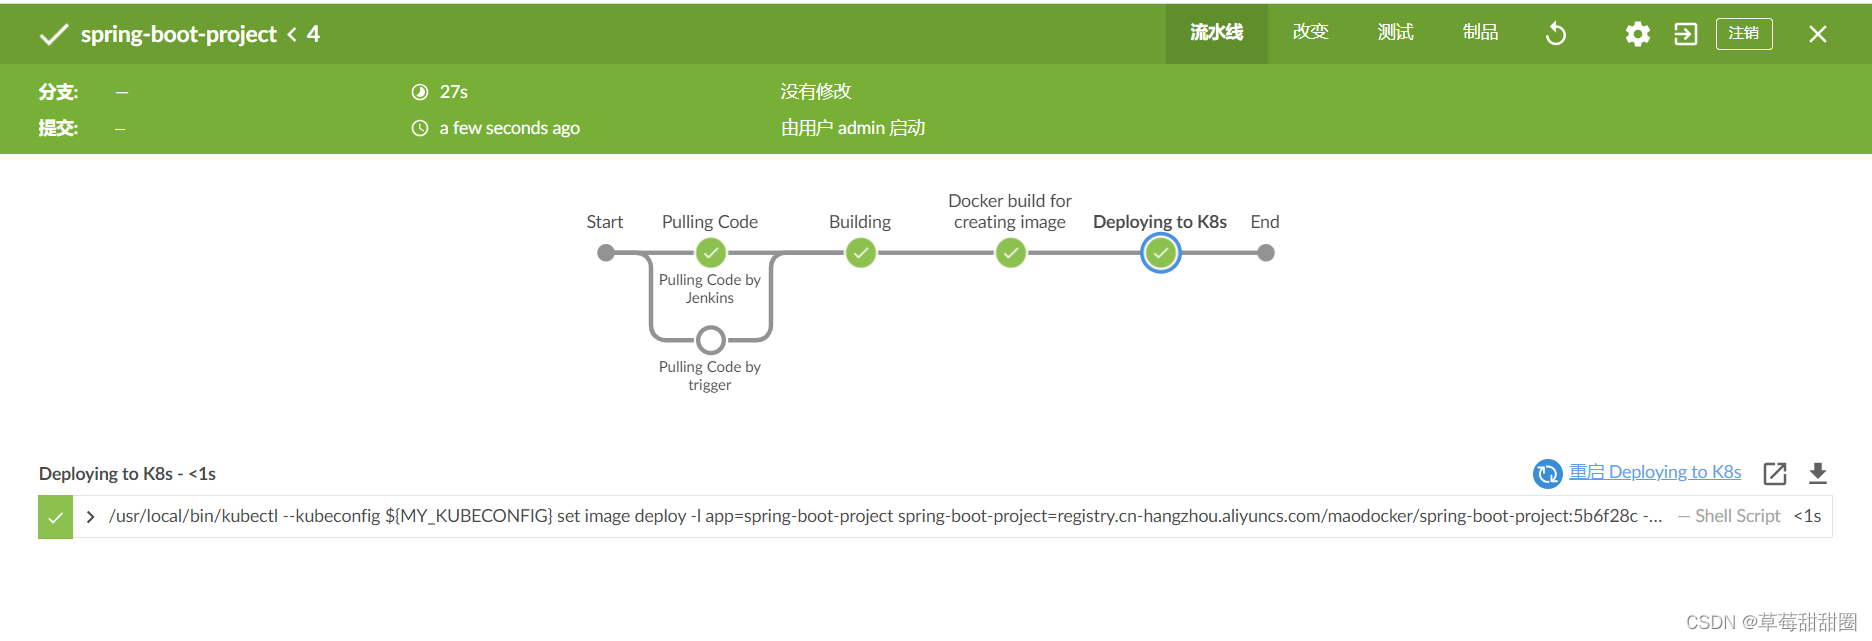 Jenkins-pipeline自动化构建Java应用